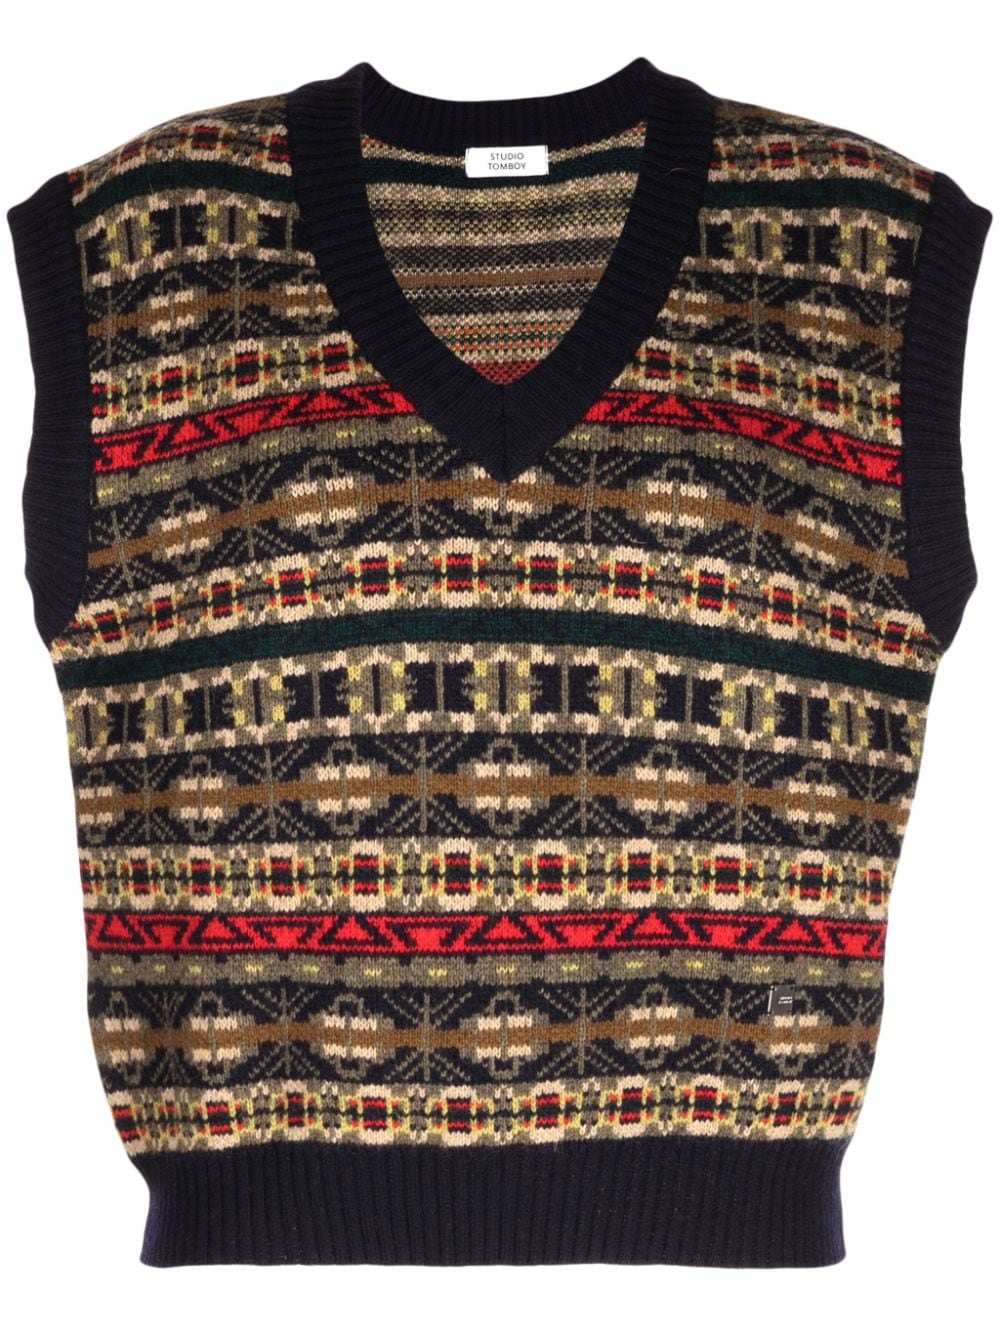 V-neck knitted top